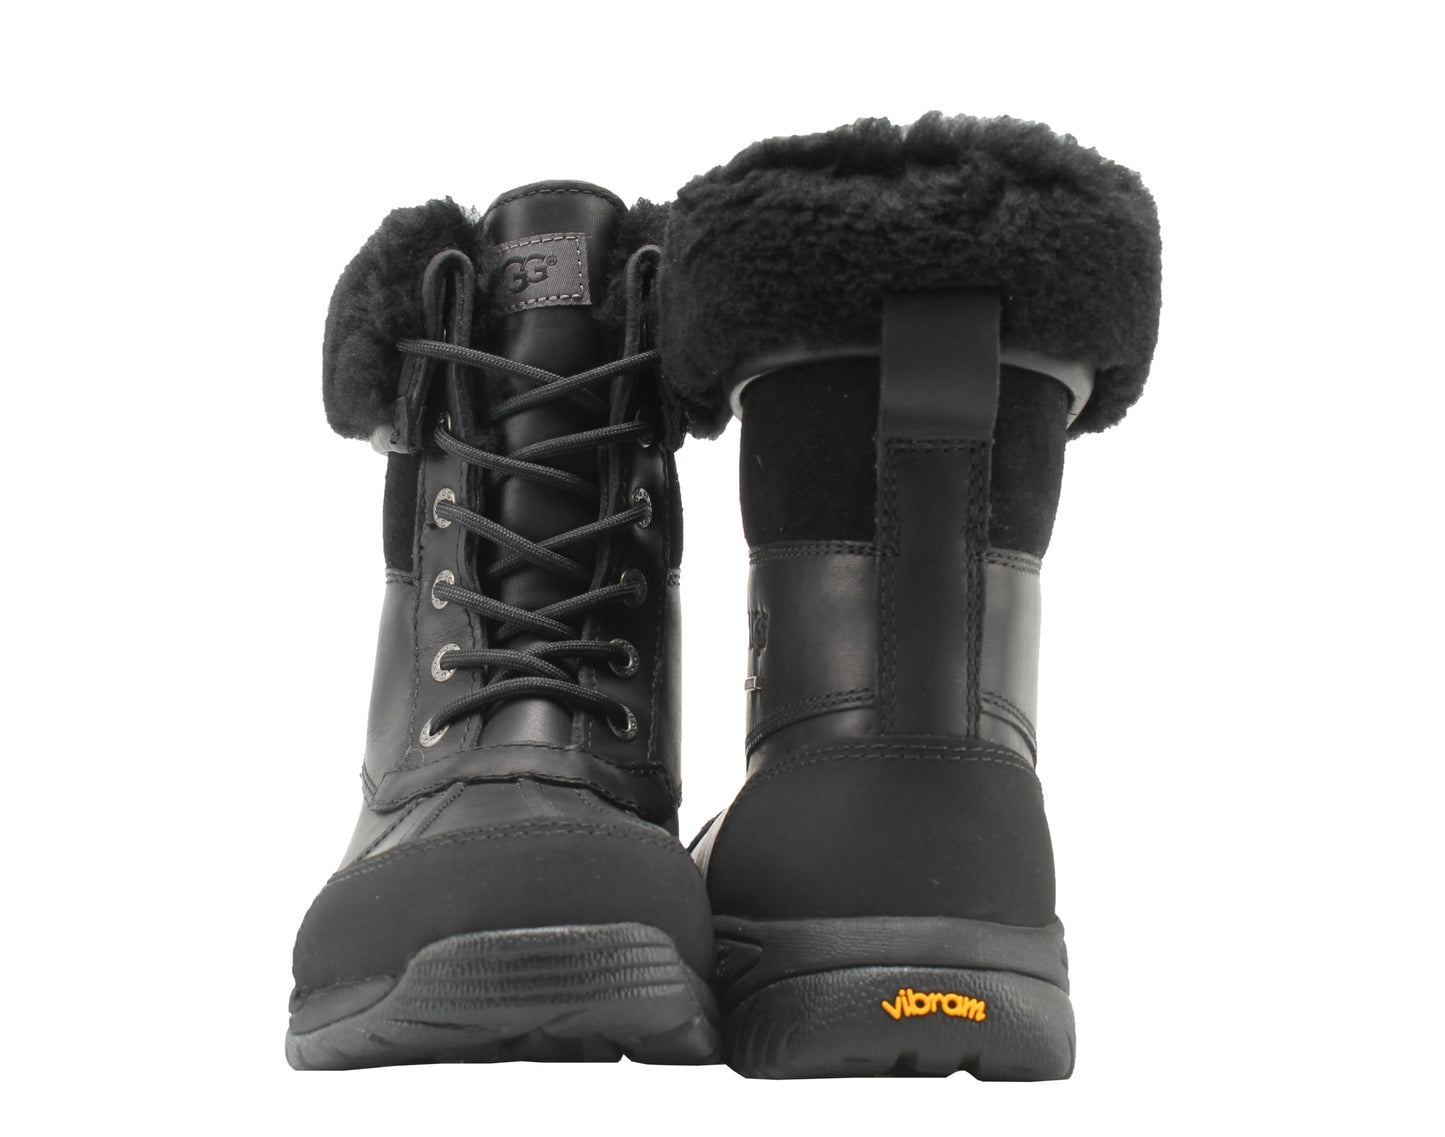 UGG Australia Butte Black Waterproof Leather Men's Winter Boots 5521 -BLK